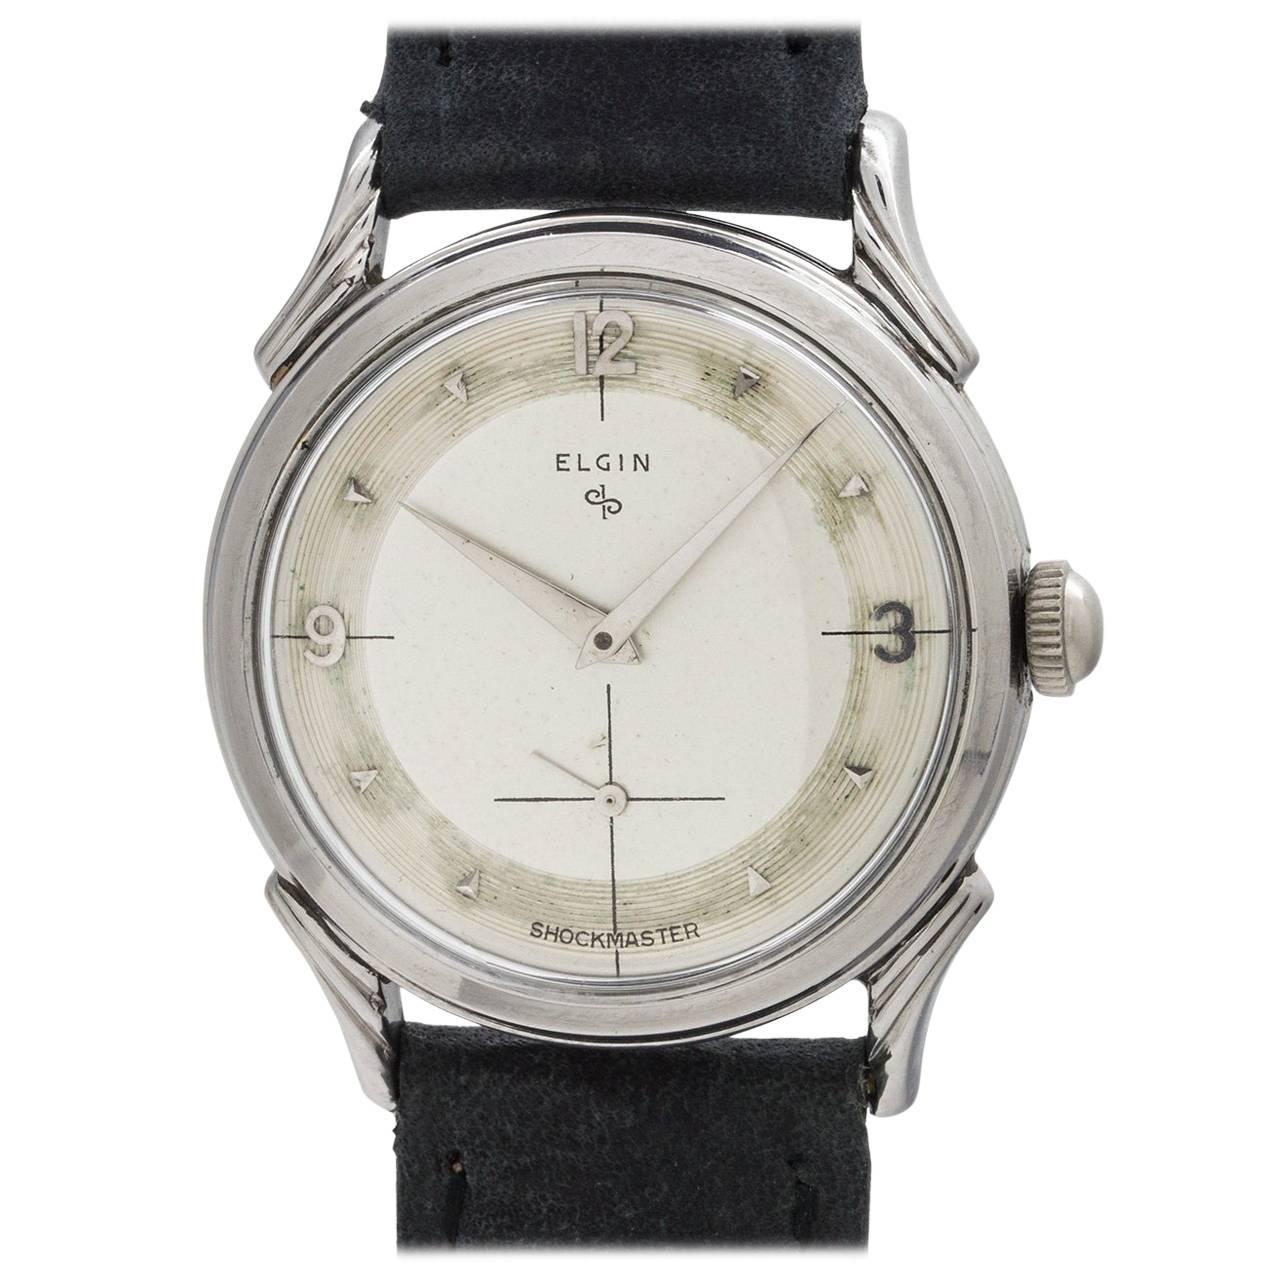 Lord Elgin Stainless Steel “LP” Dress Manual Wristwatch, circa 1950s